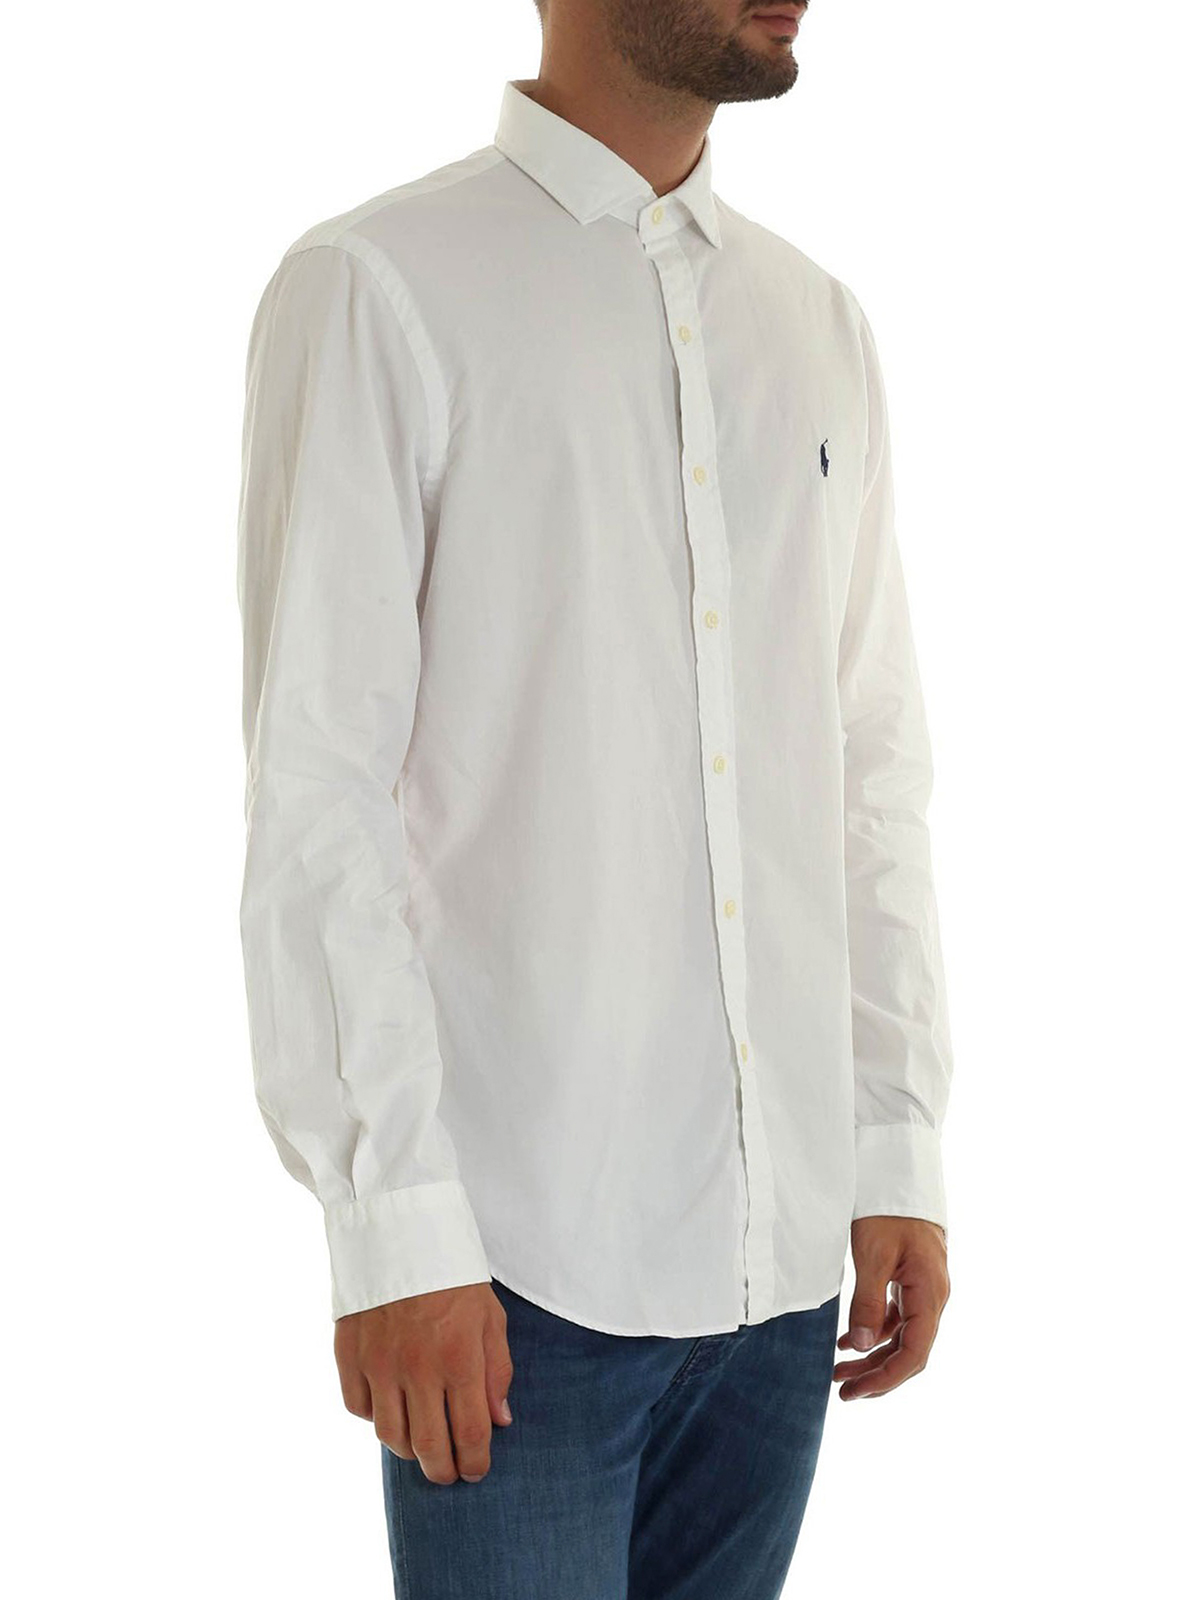 barricade Overtreffen Gluren Shirts Polo Ralph Lauren - Logo embroidery white shirt - 710767112005